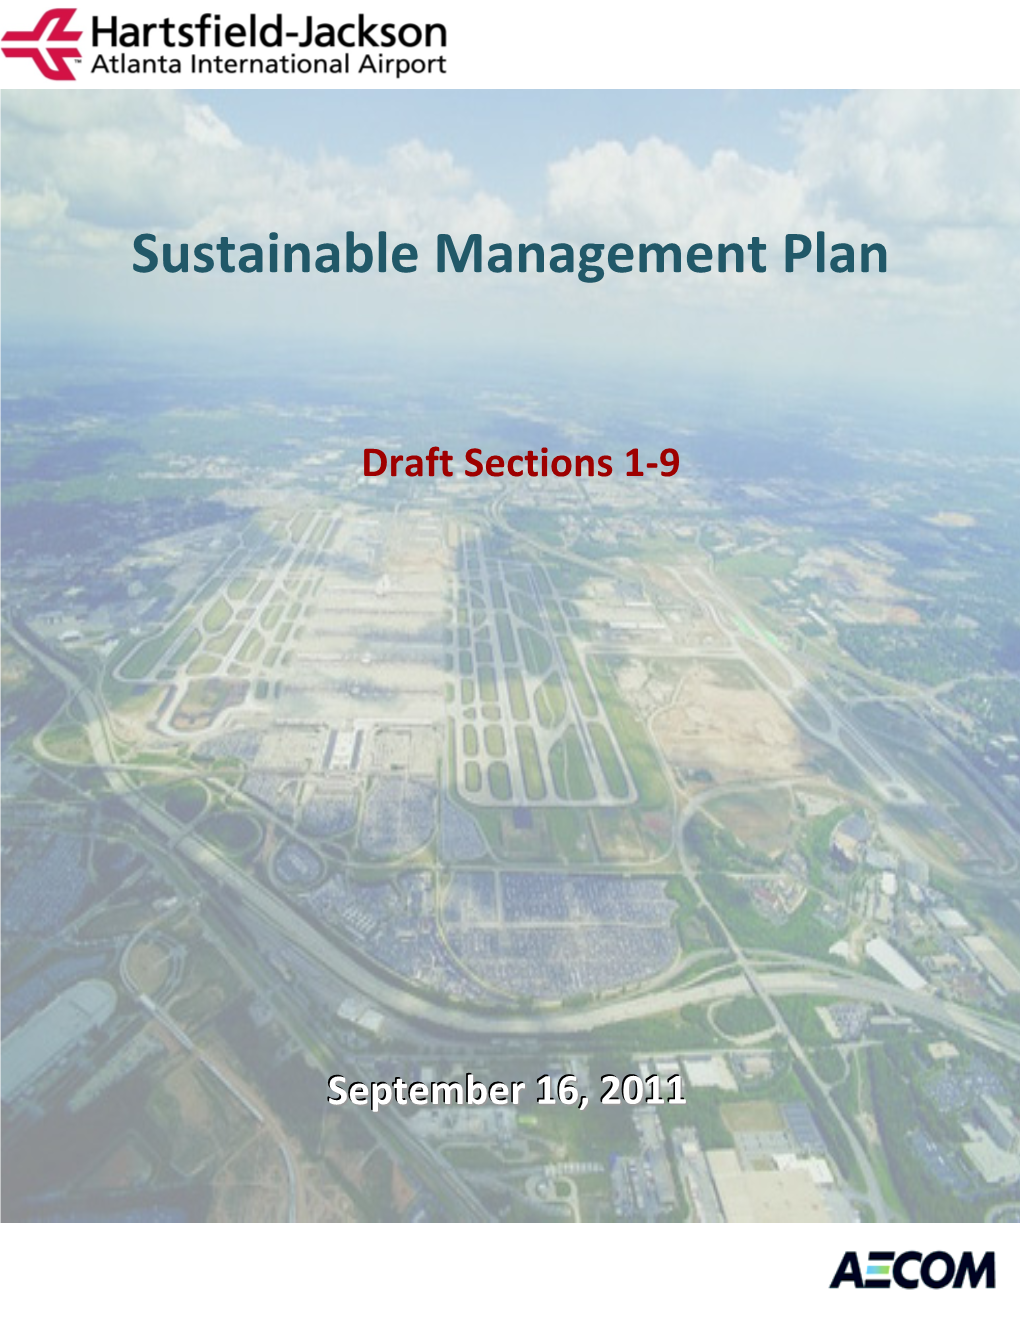 Hartsfield-Jackson Atlanta International Airport Sustainable Managment Plan (Draft Sections 1-9), 16 September 2011